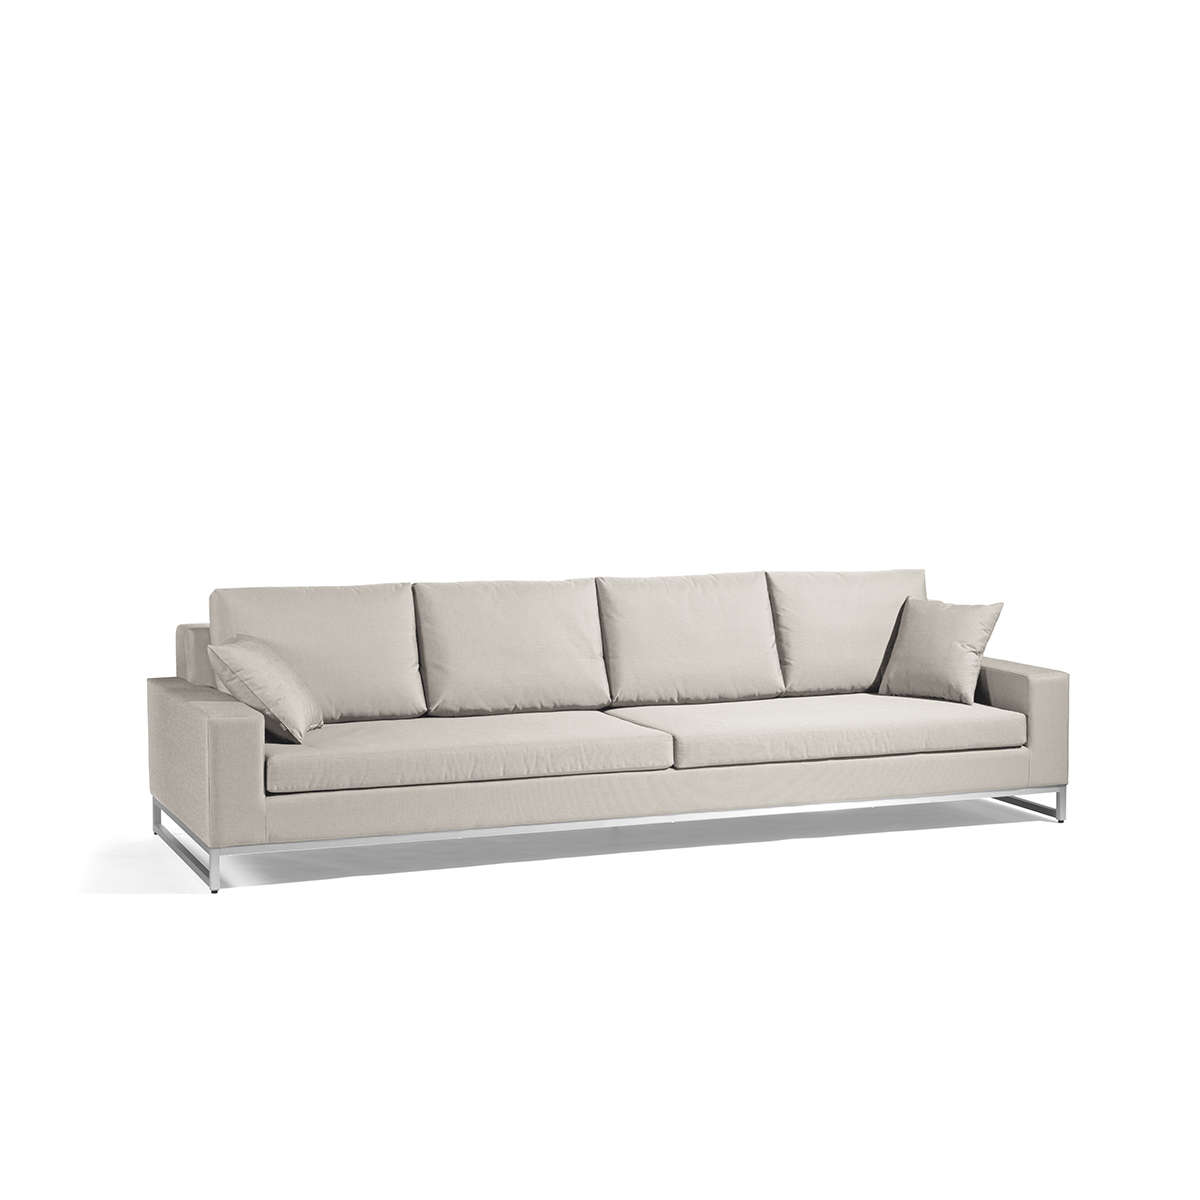 Zendo Modular Sofa